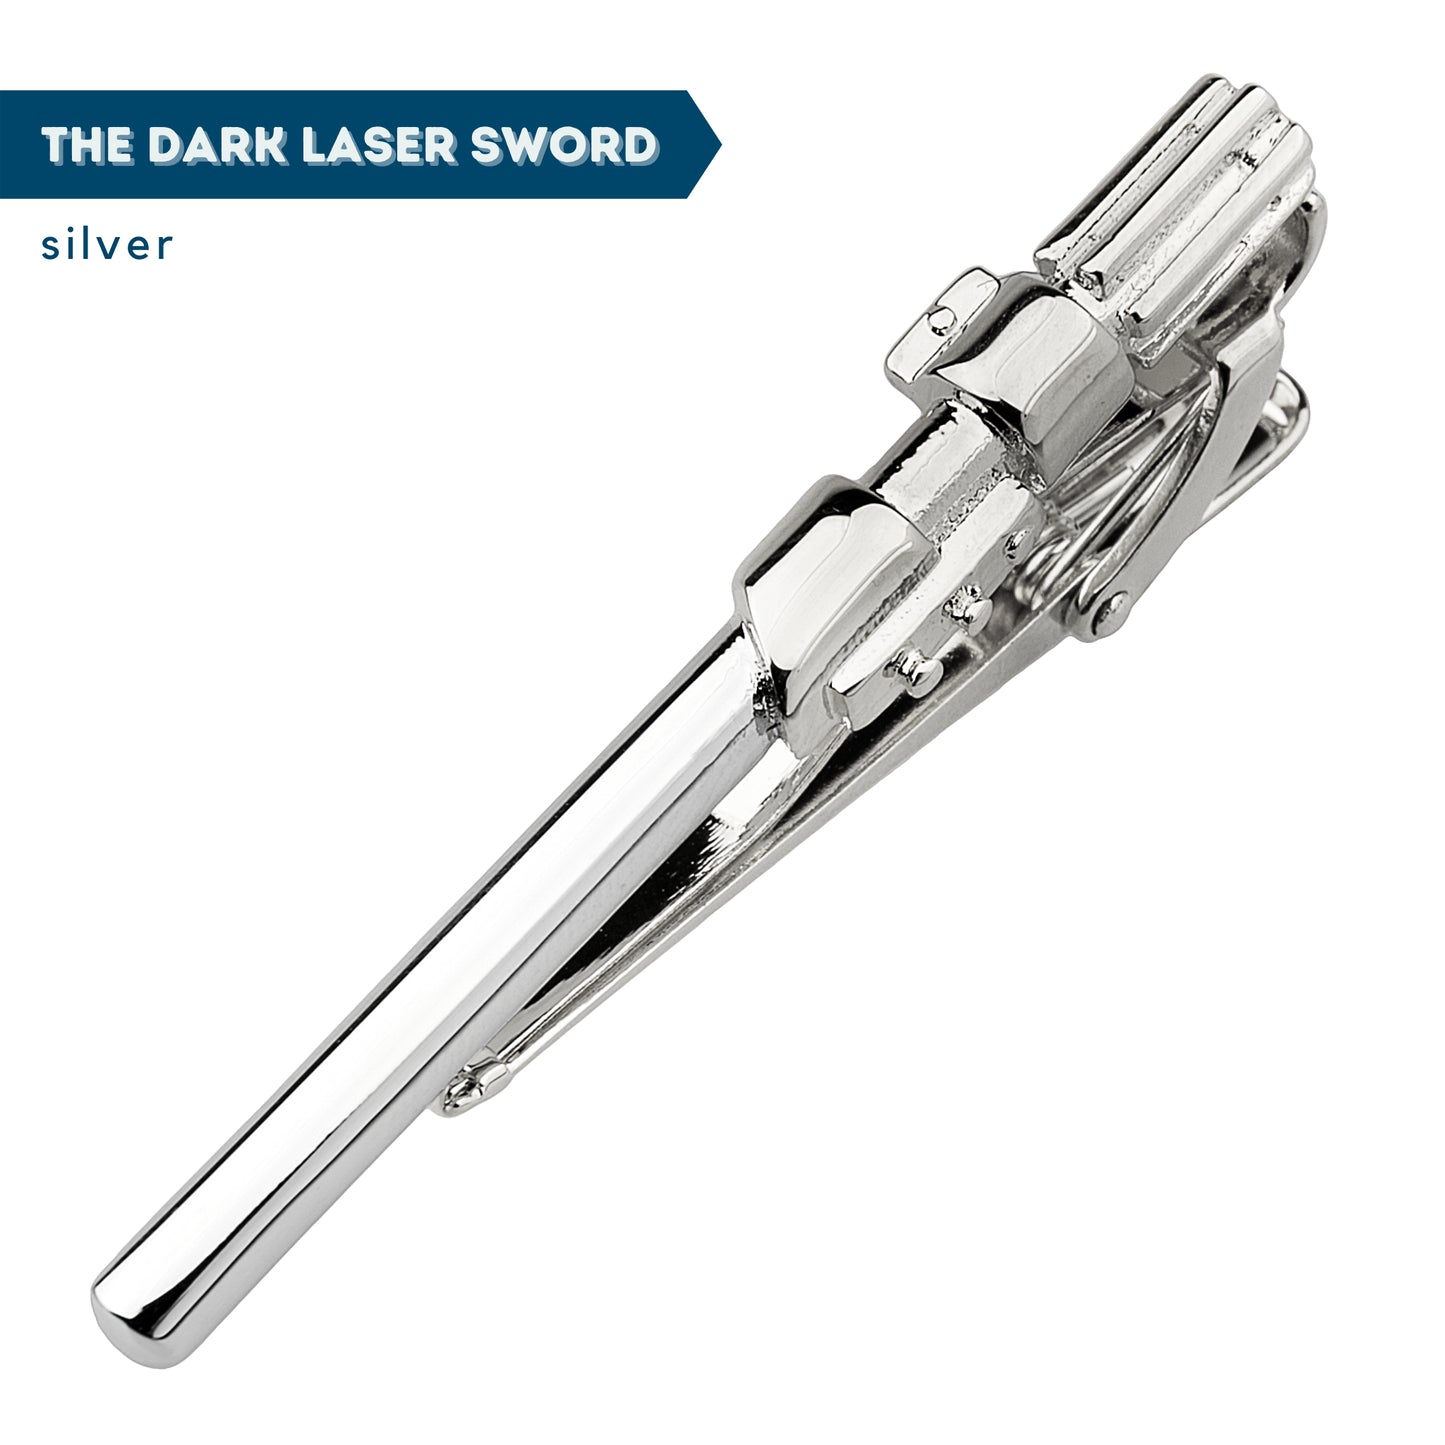 Empire's Tie + Dark Laser Sword